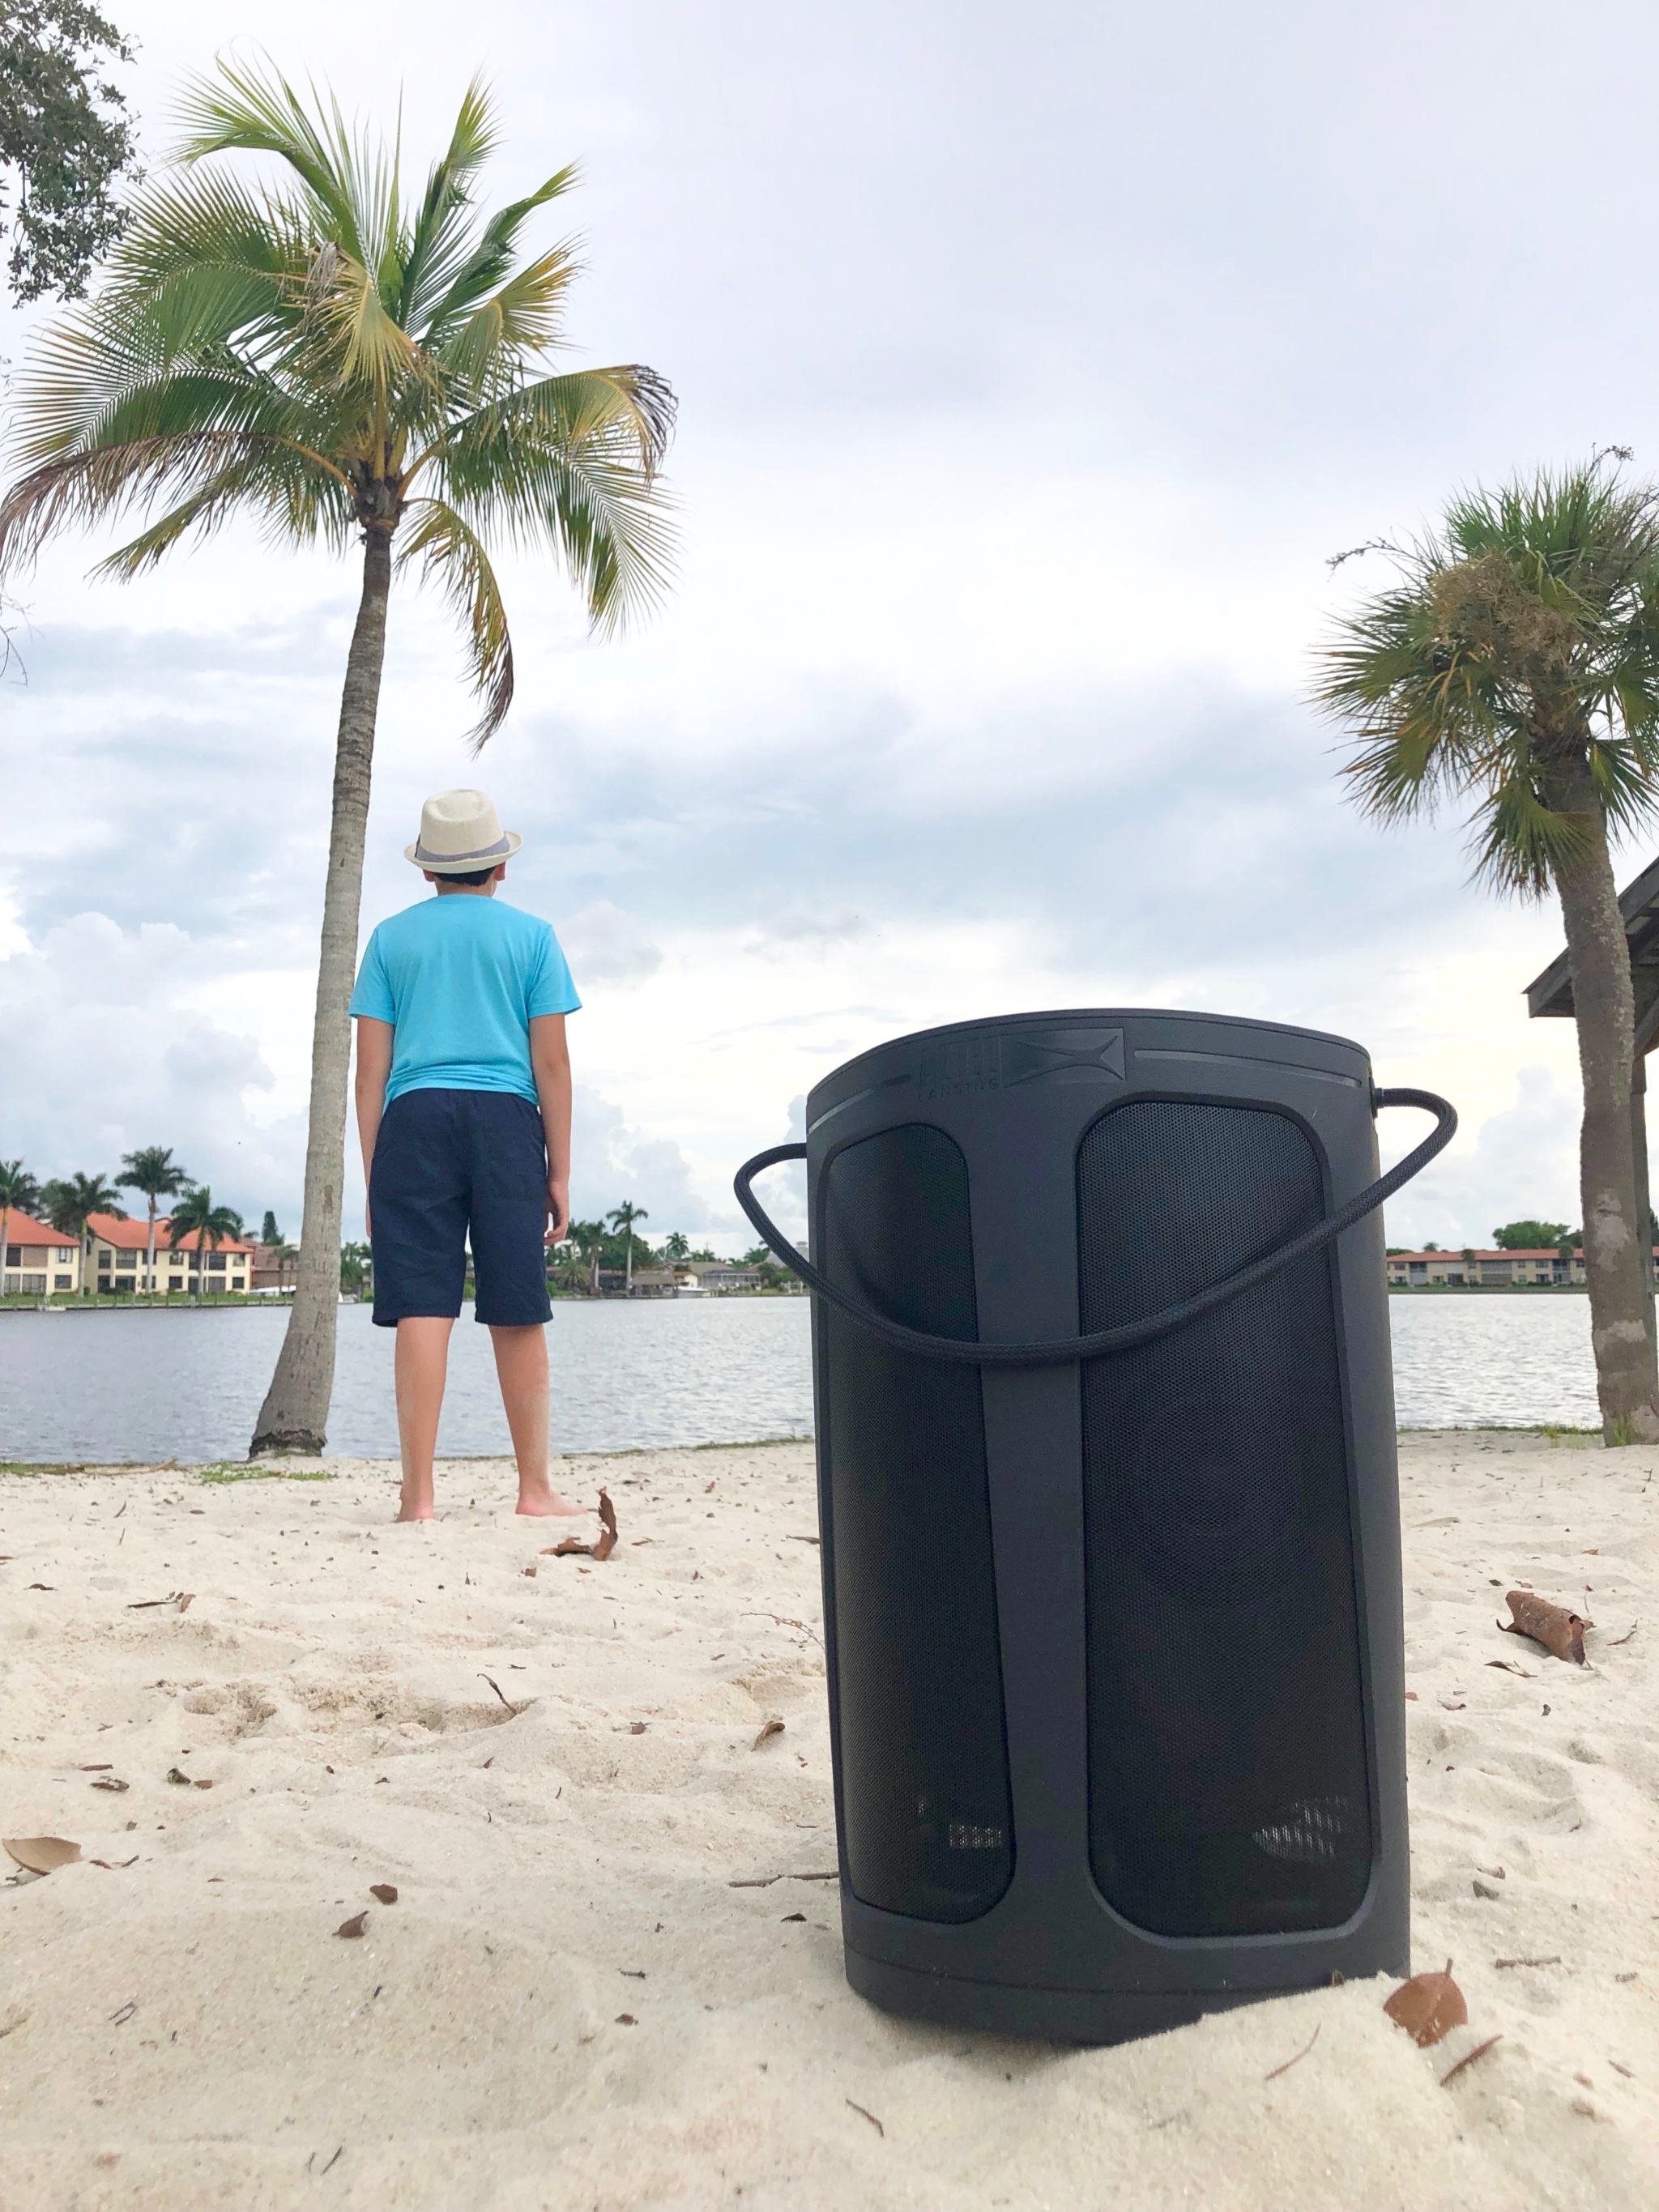 The Best Waterproof Speaker of 2019: Altec Lansing SoundBucket XL Bluetooth Speaker Review